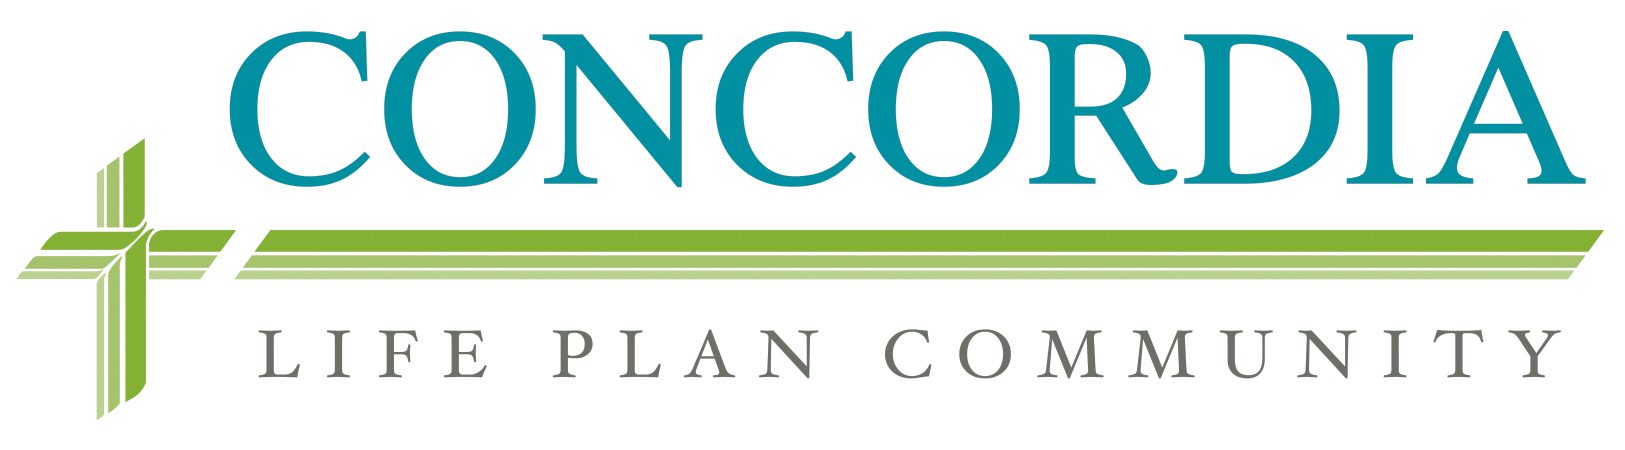 Concordia Life Plan Community logo